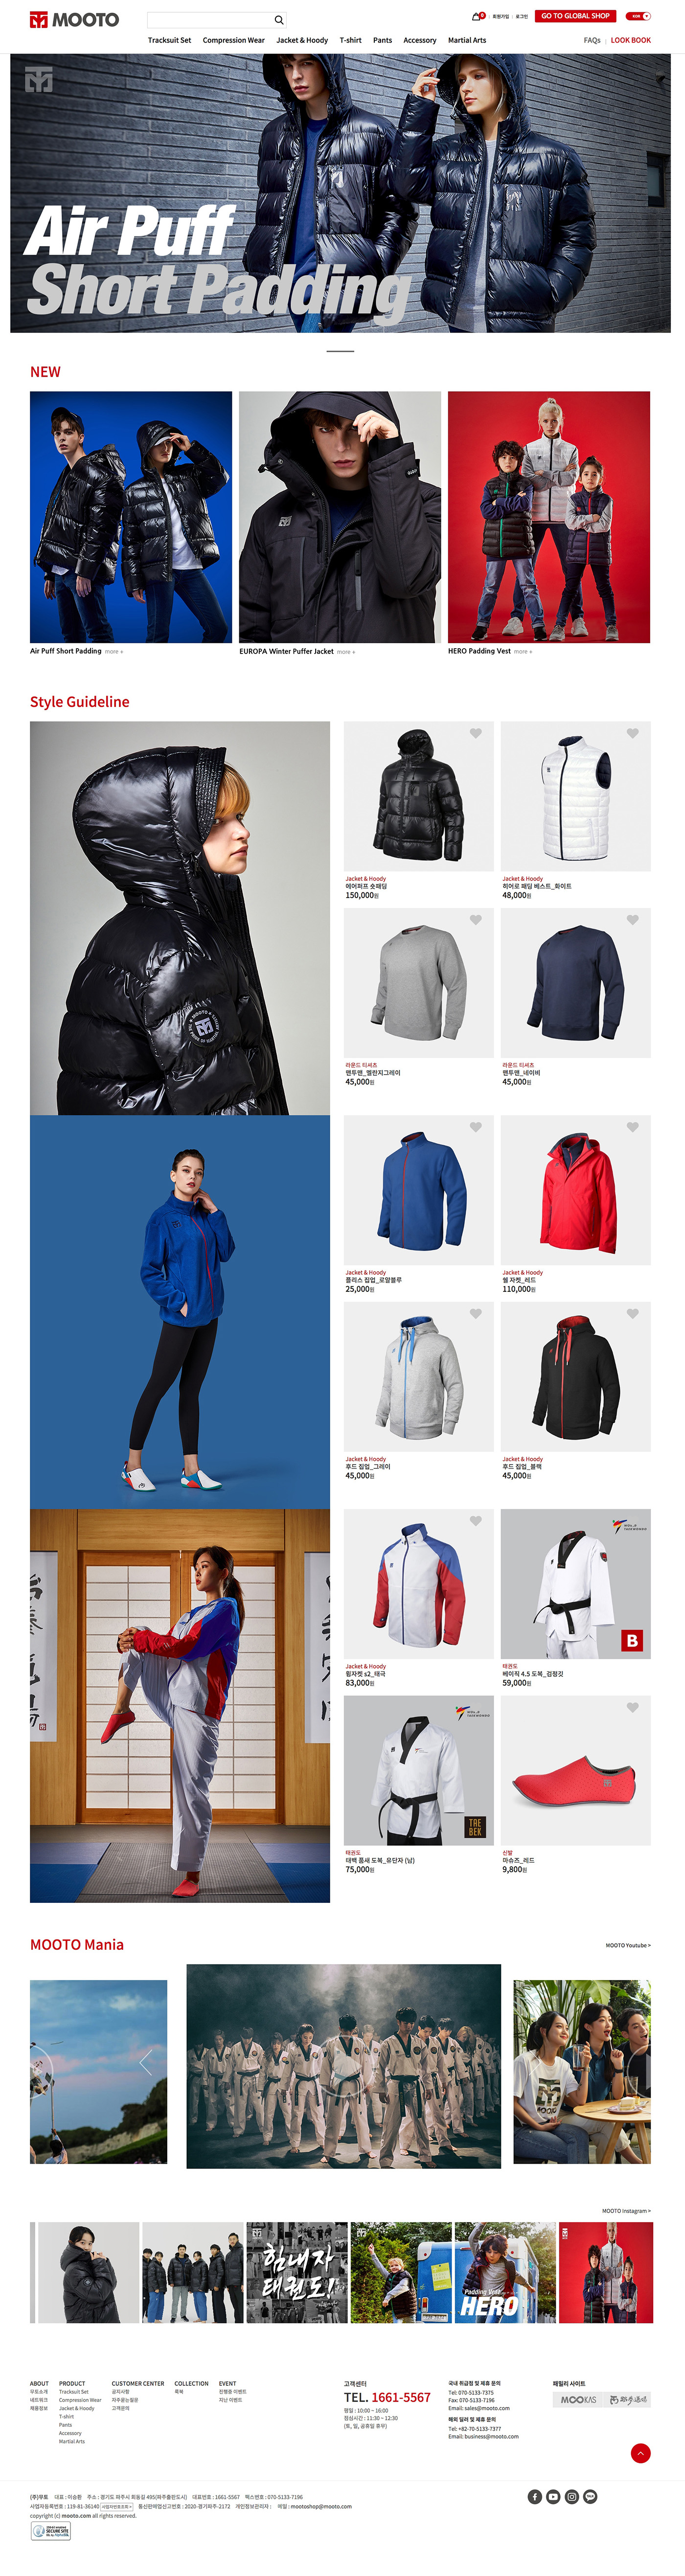 韩国服饰品牌MOOTO网站设计